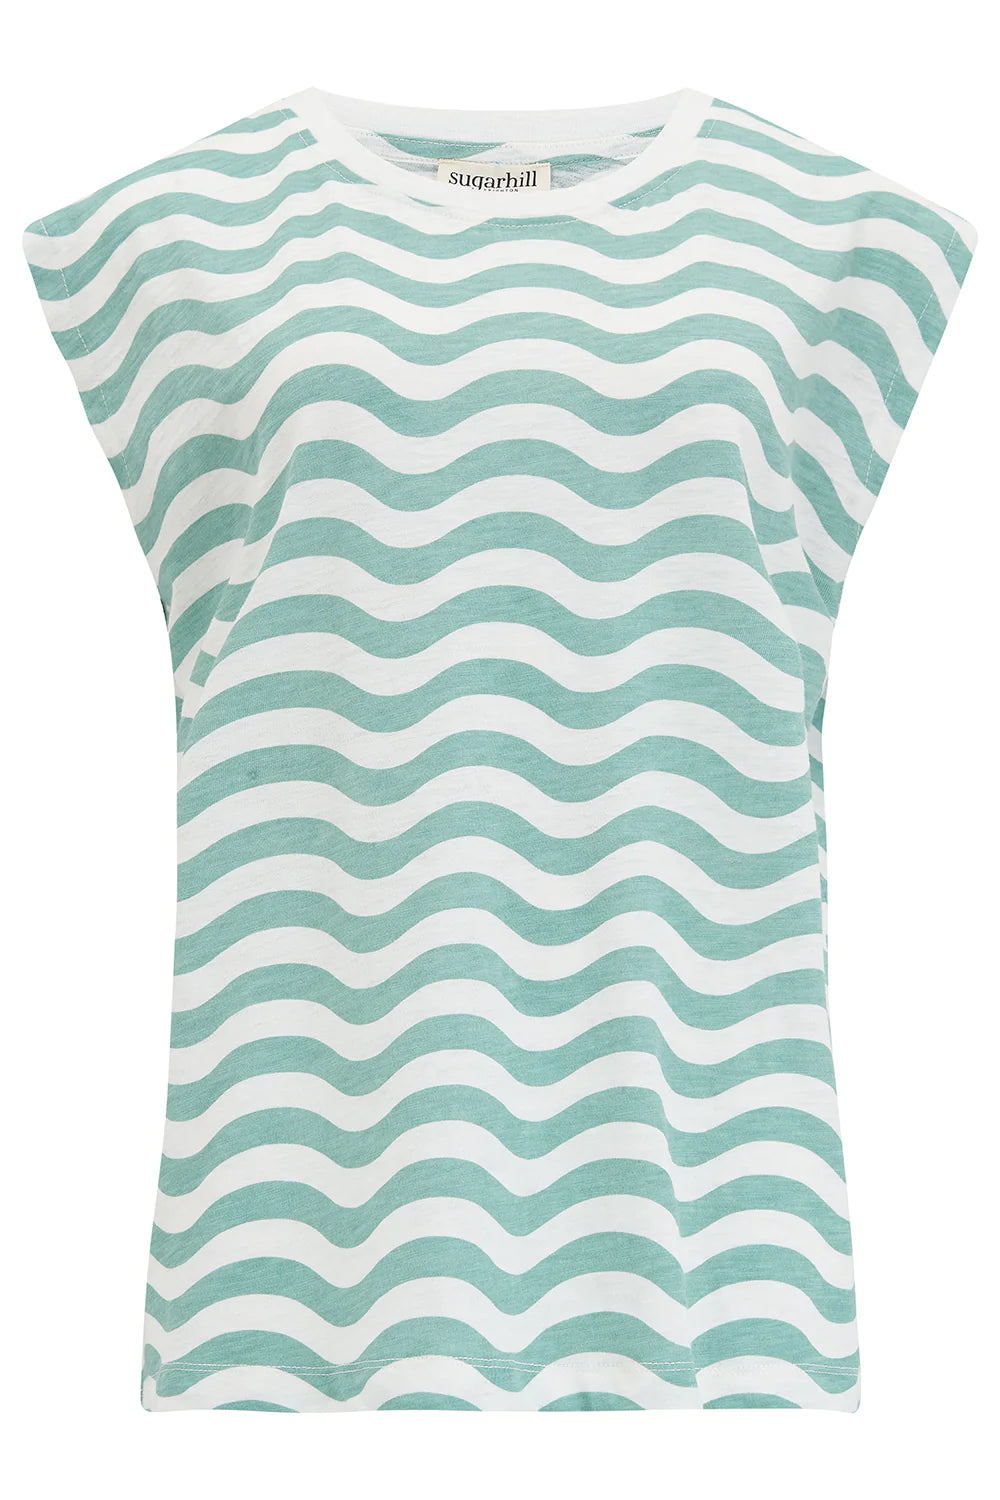 Sugarhill Brighton Chrissy Relaxed Tank T-shirt - Off-White/Sea Green, Wavy Stripes